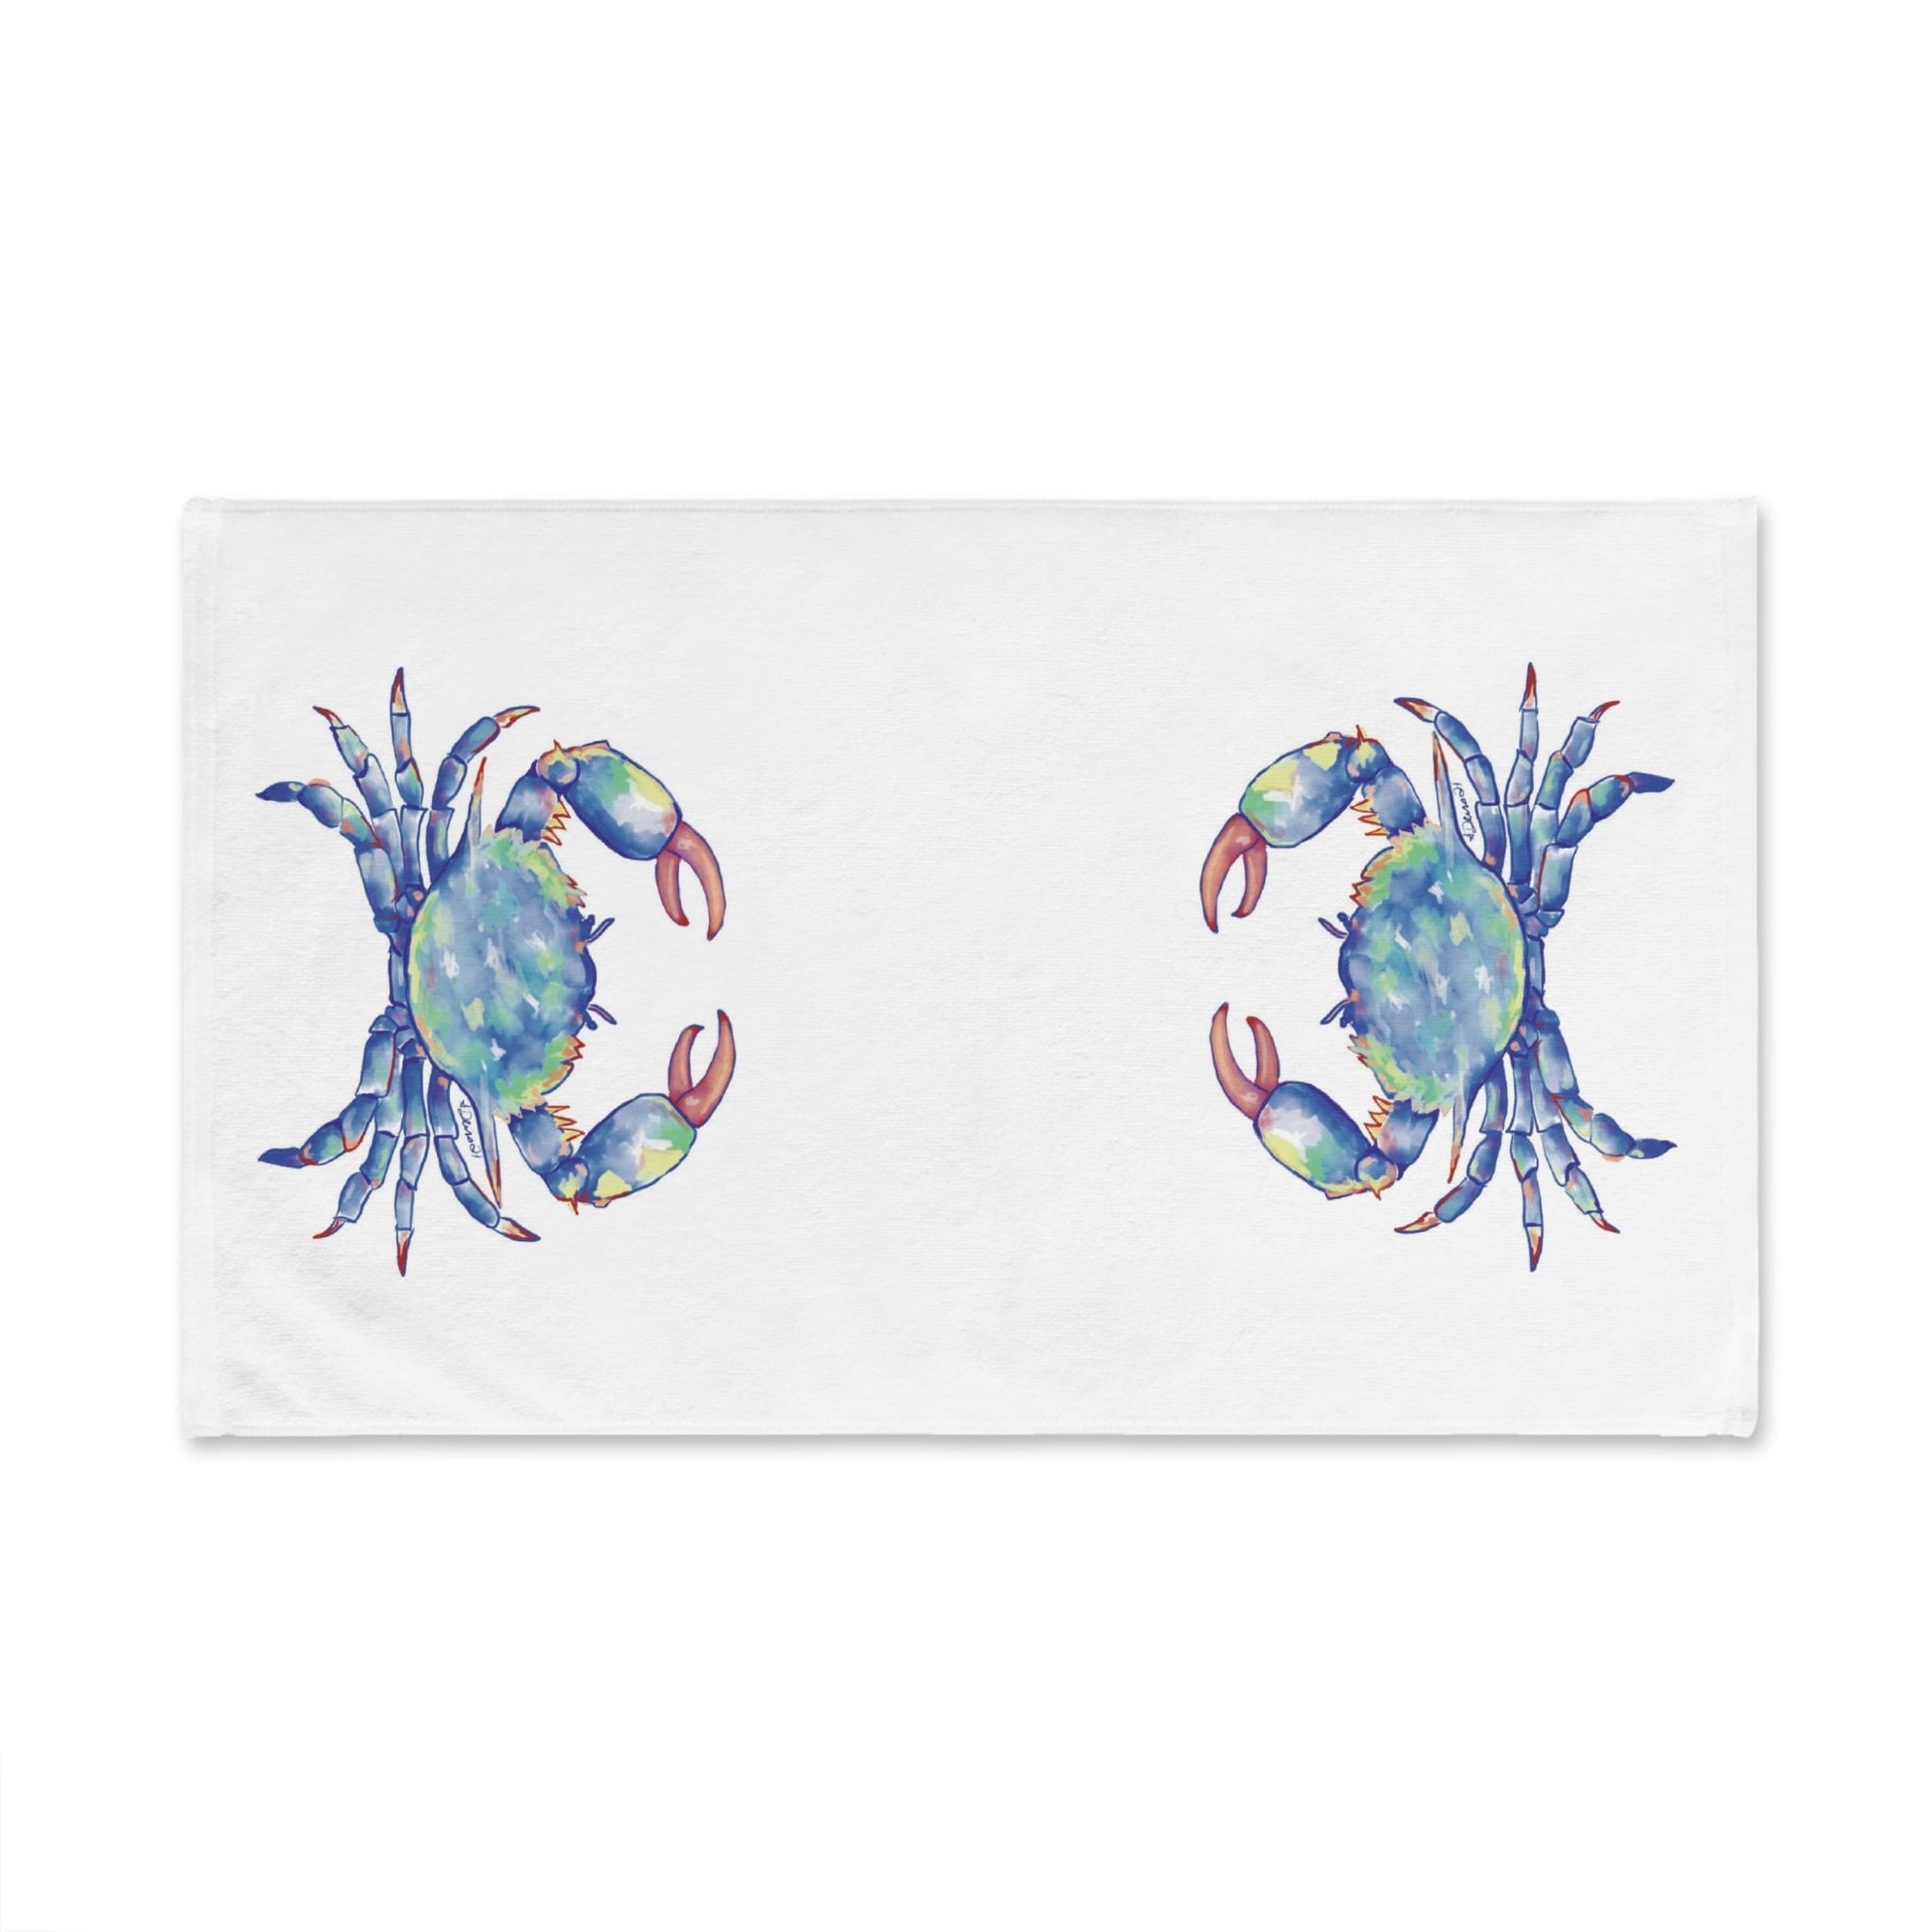 Blue Crab Hand Towel (Poly/Cotton) - Blue Cava